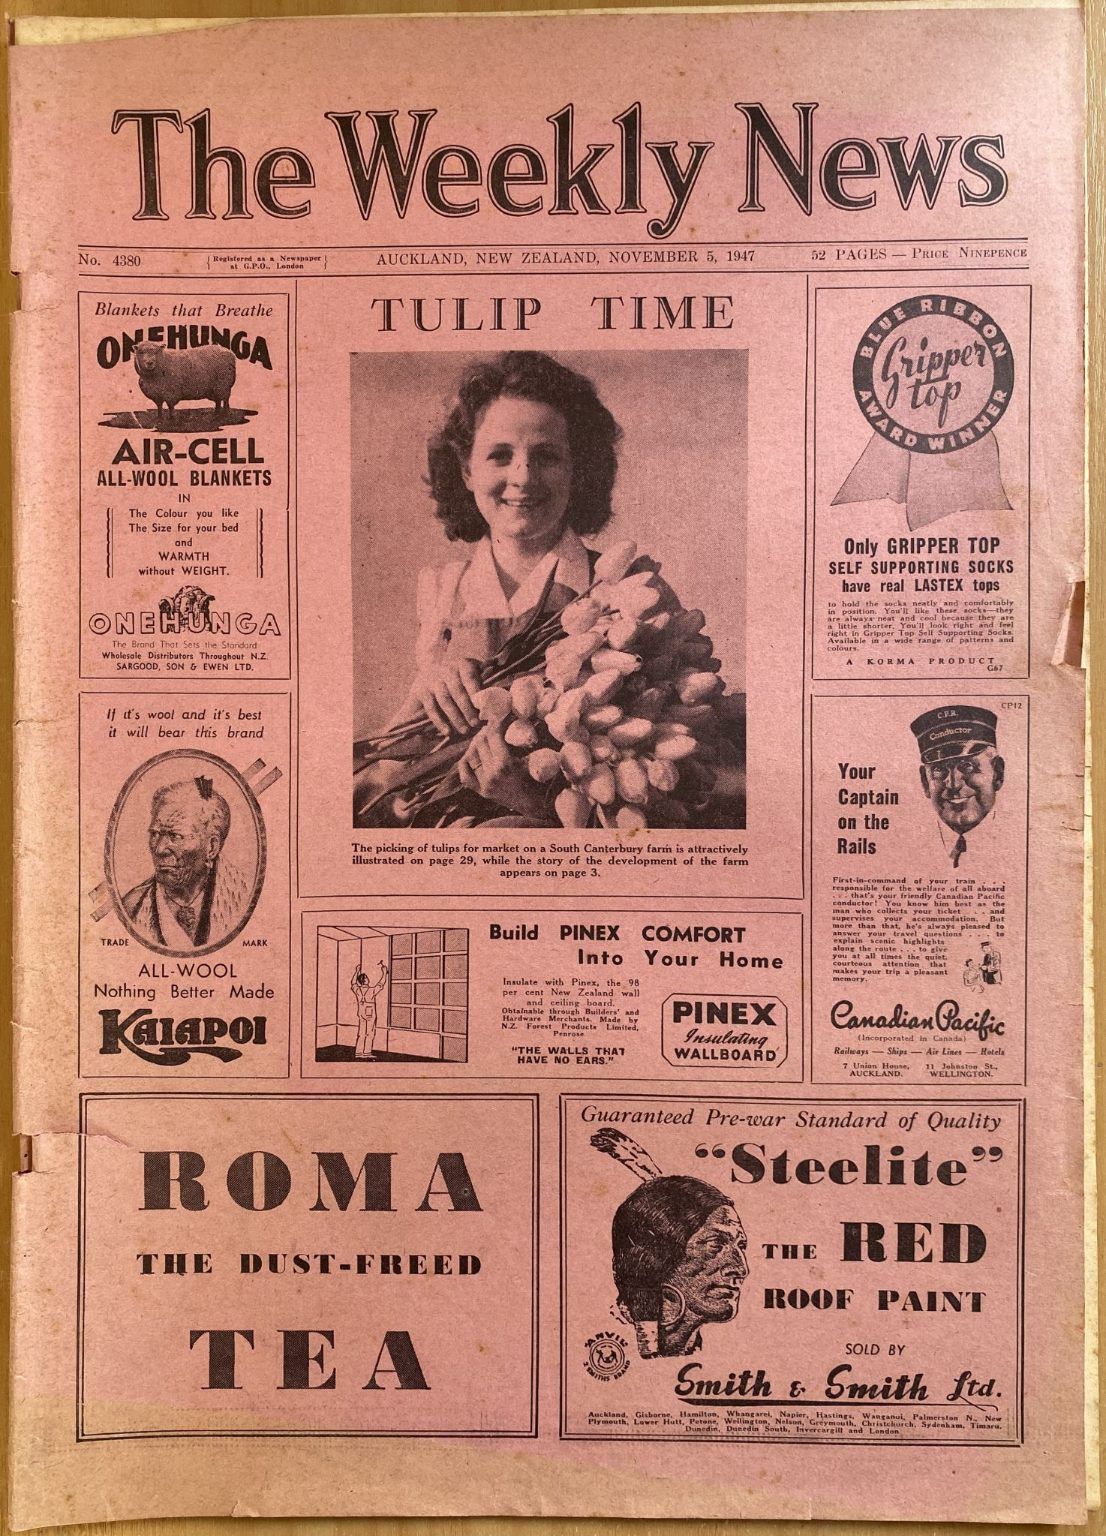 OLD NEWSPAPER: The Weekly News, No. 4380, 5 November 1947